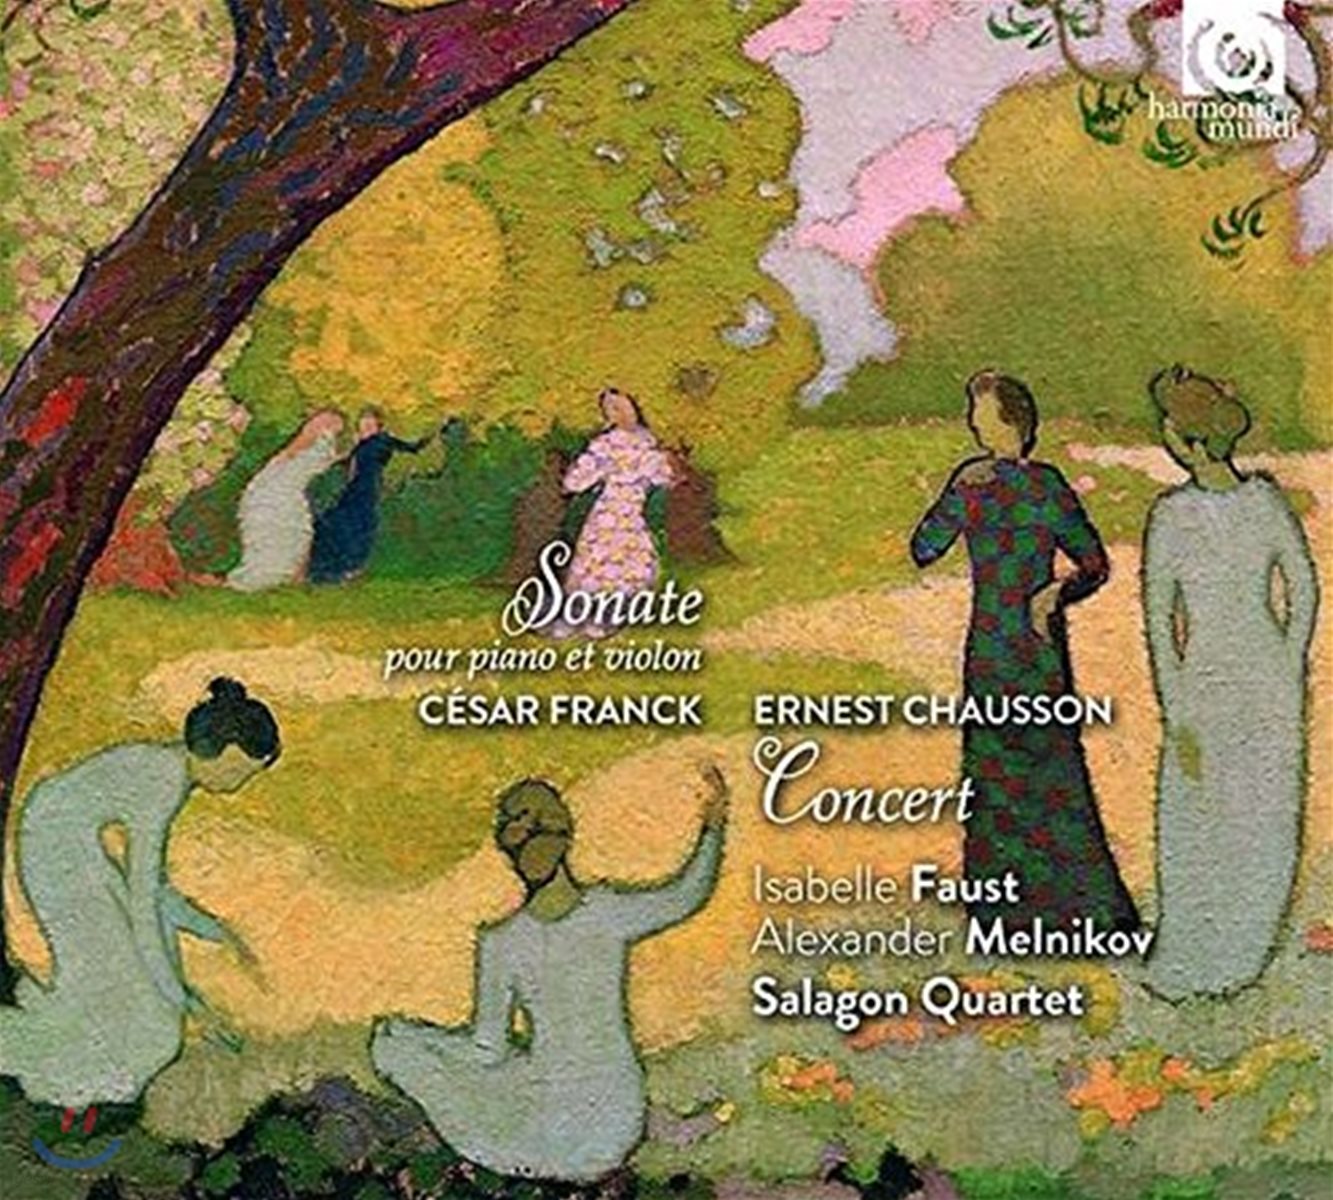 Alexander Melnikov / Isabelle Faust 프랑크: 바이올린 소나타 / 쇼송: 협주곡 - 이자벨 파우스트, 알렉산더 멜니코프, 살라곤 사중주단 (Franck: Violin Sonata / Chausson: Concert)